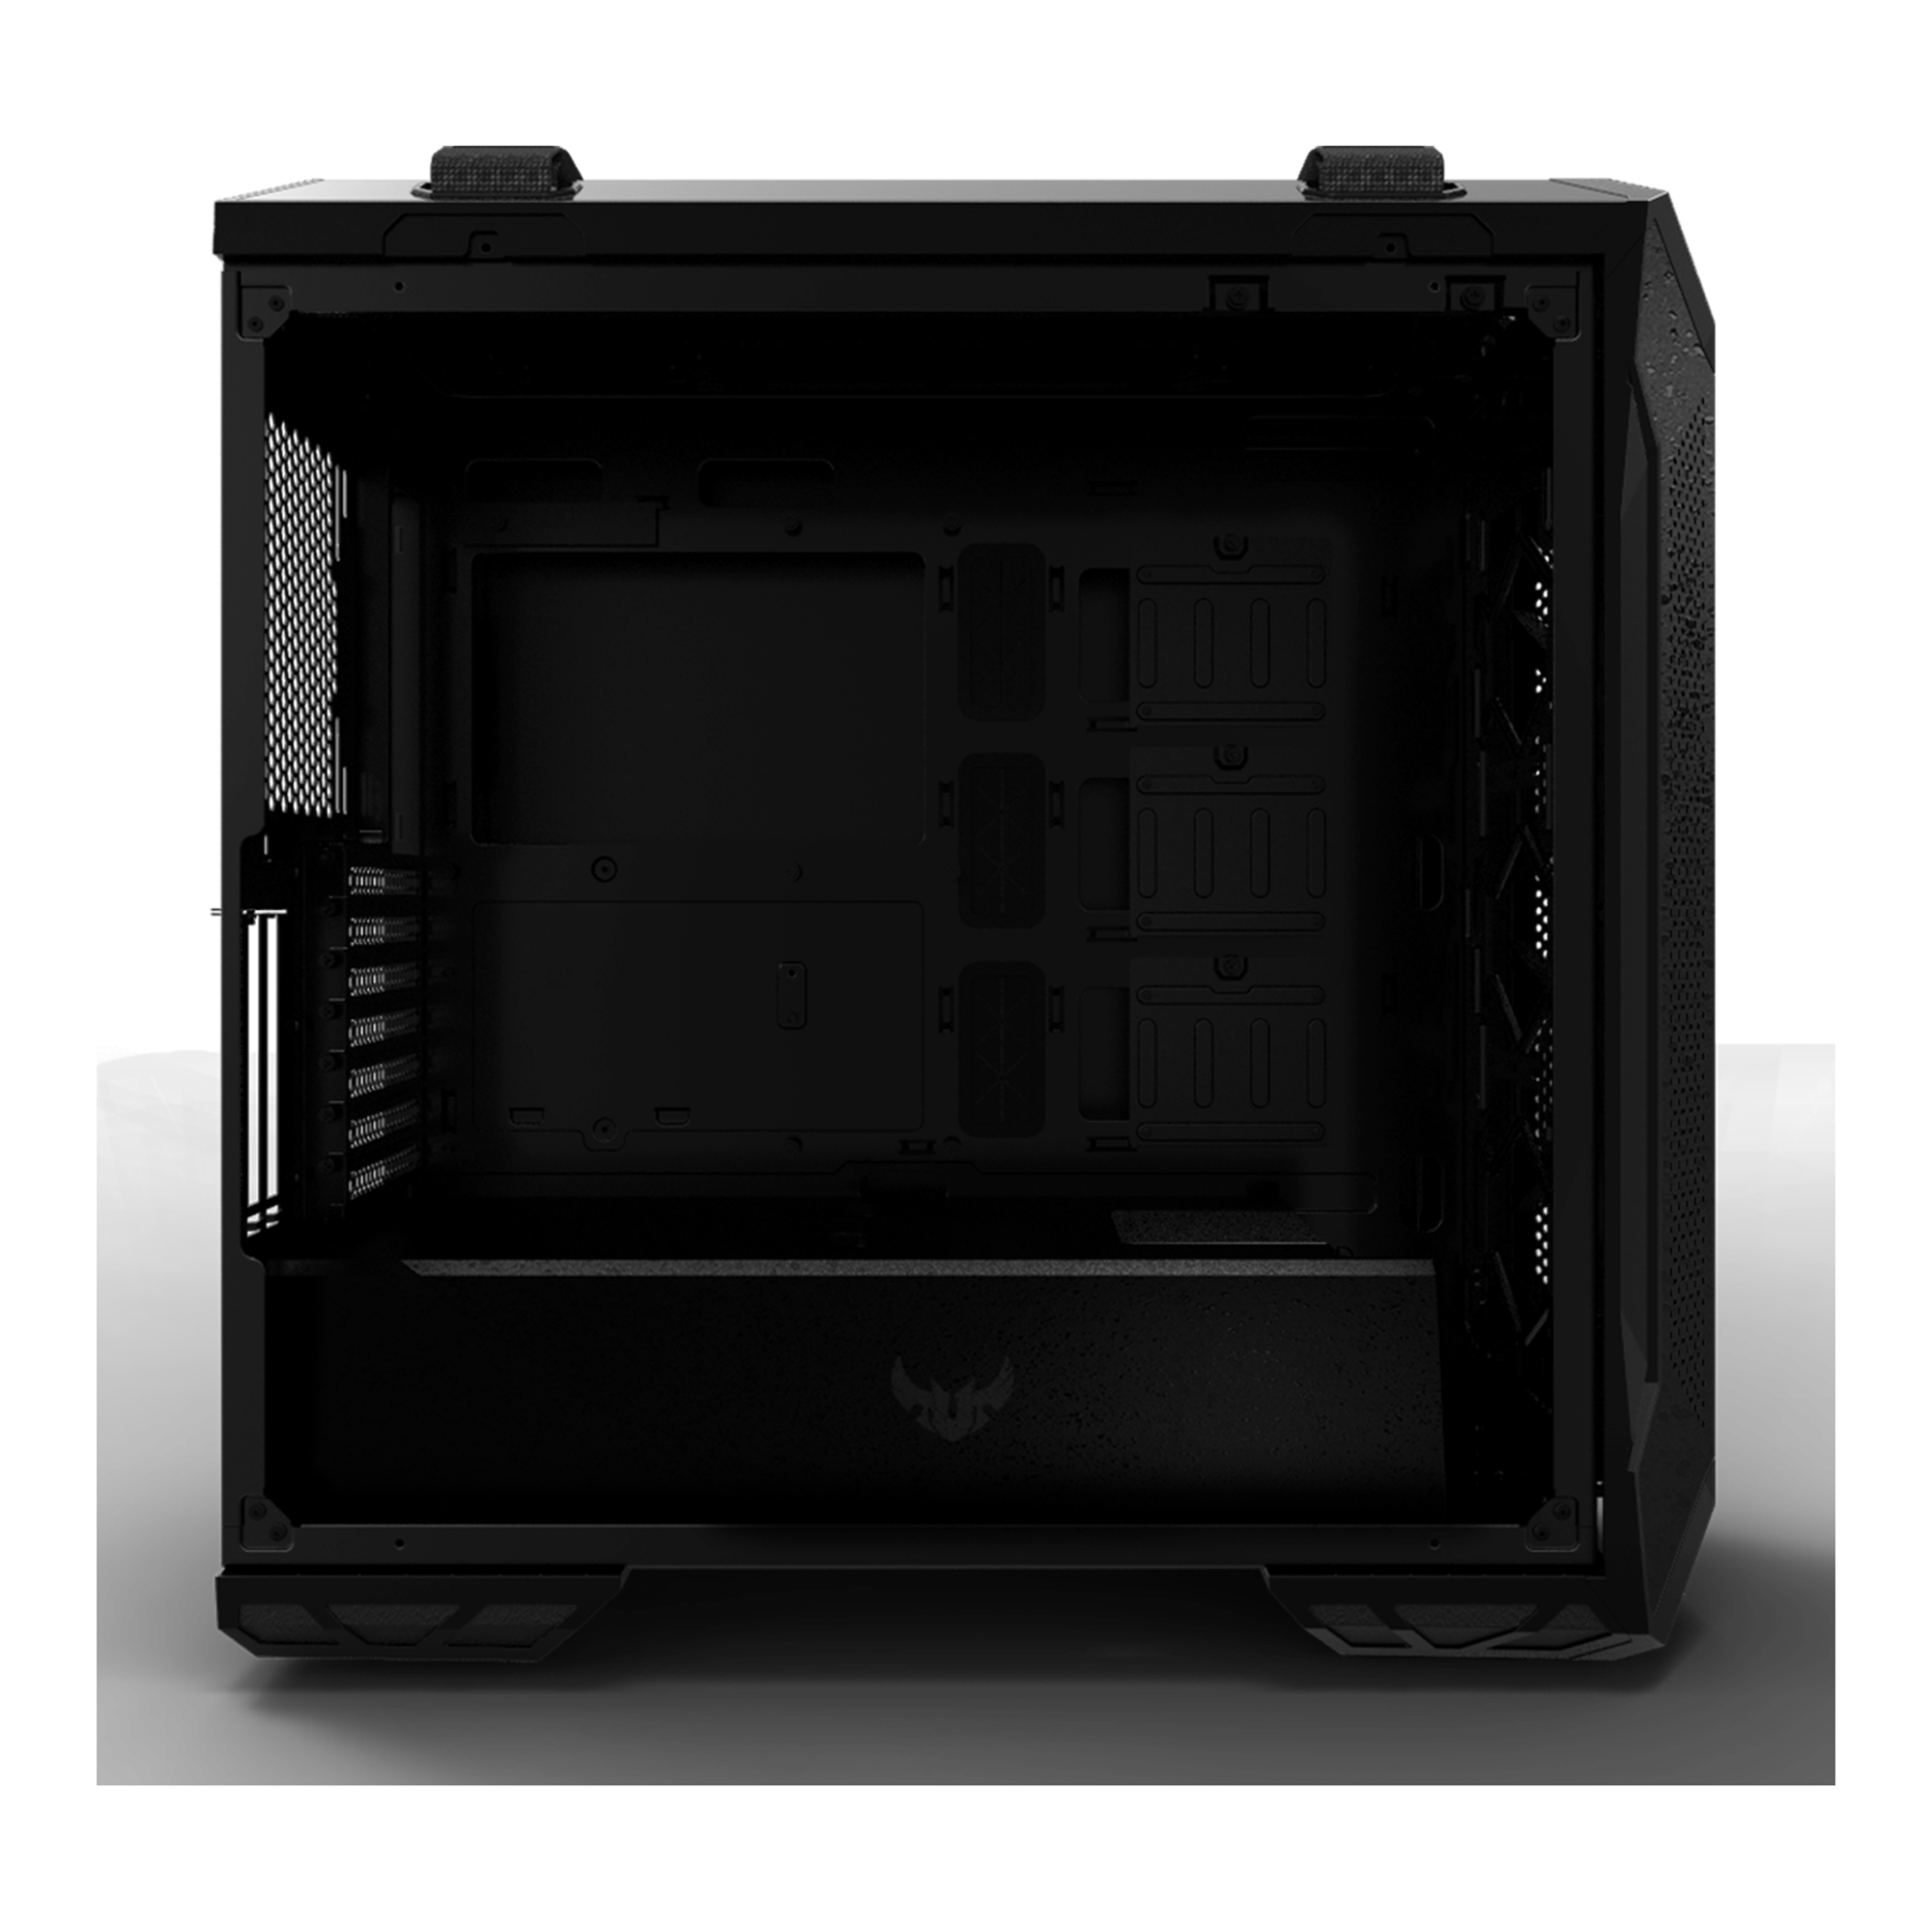 Asus boitier pc tuf gaming gt501 - noir - format e-atx (bt-asu